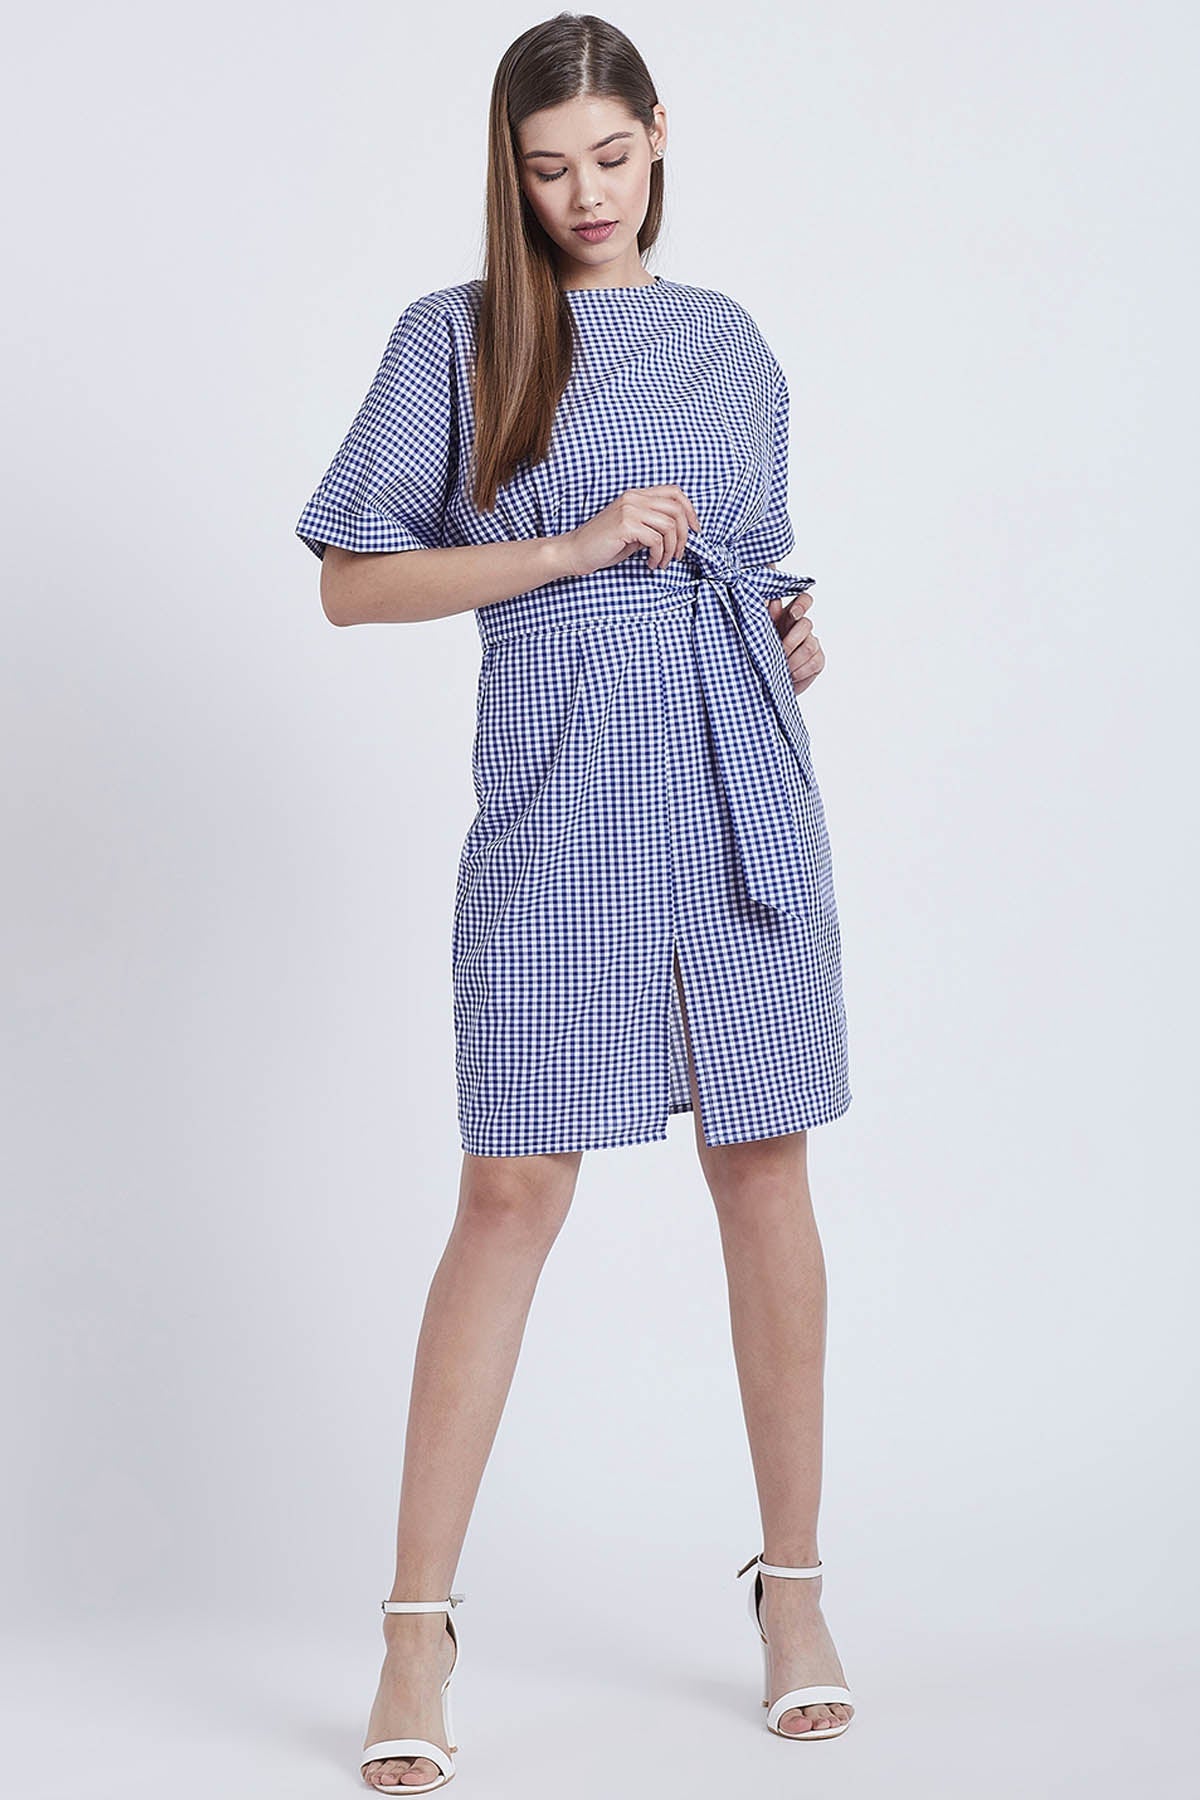 Bohobi Navy Cotton Checkered Dress For Women Online at ScrollnShops